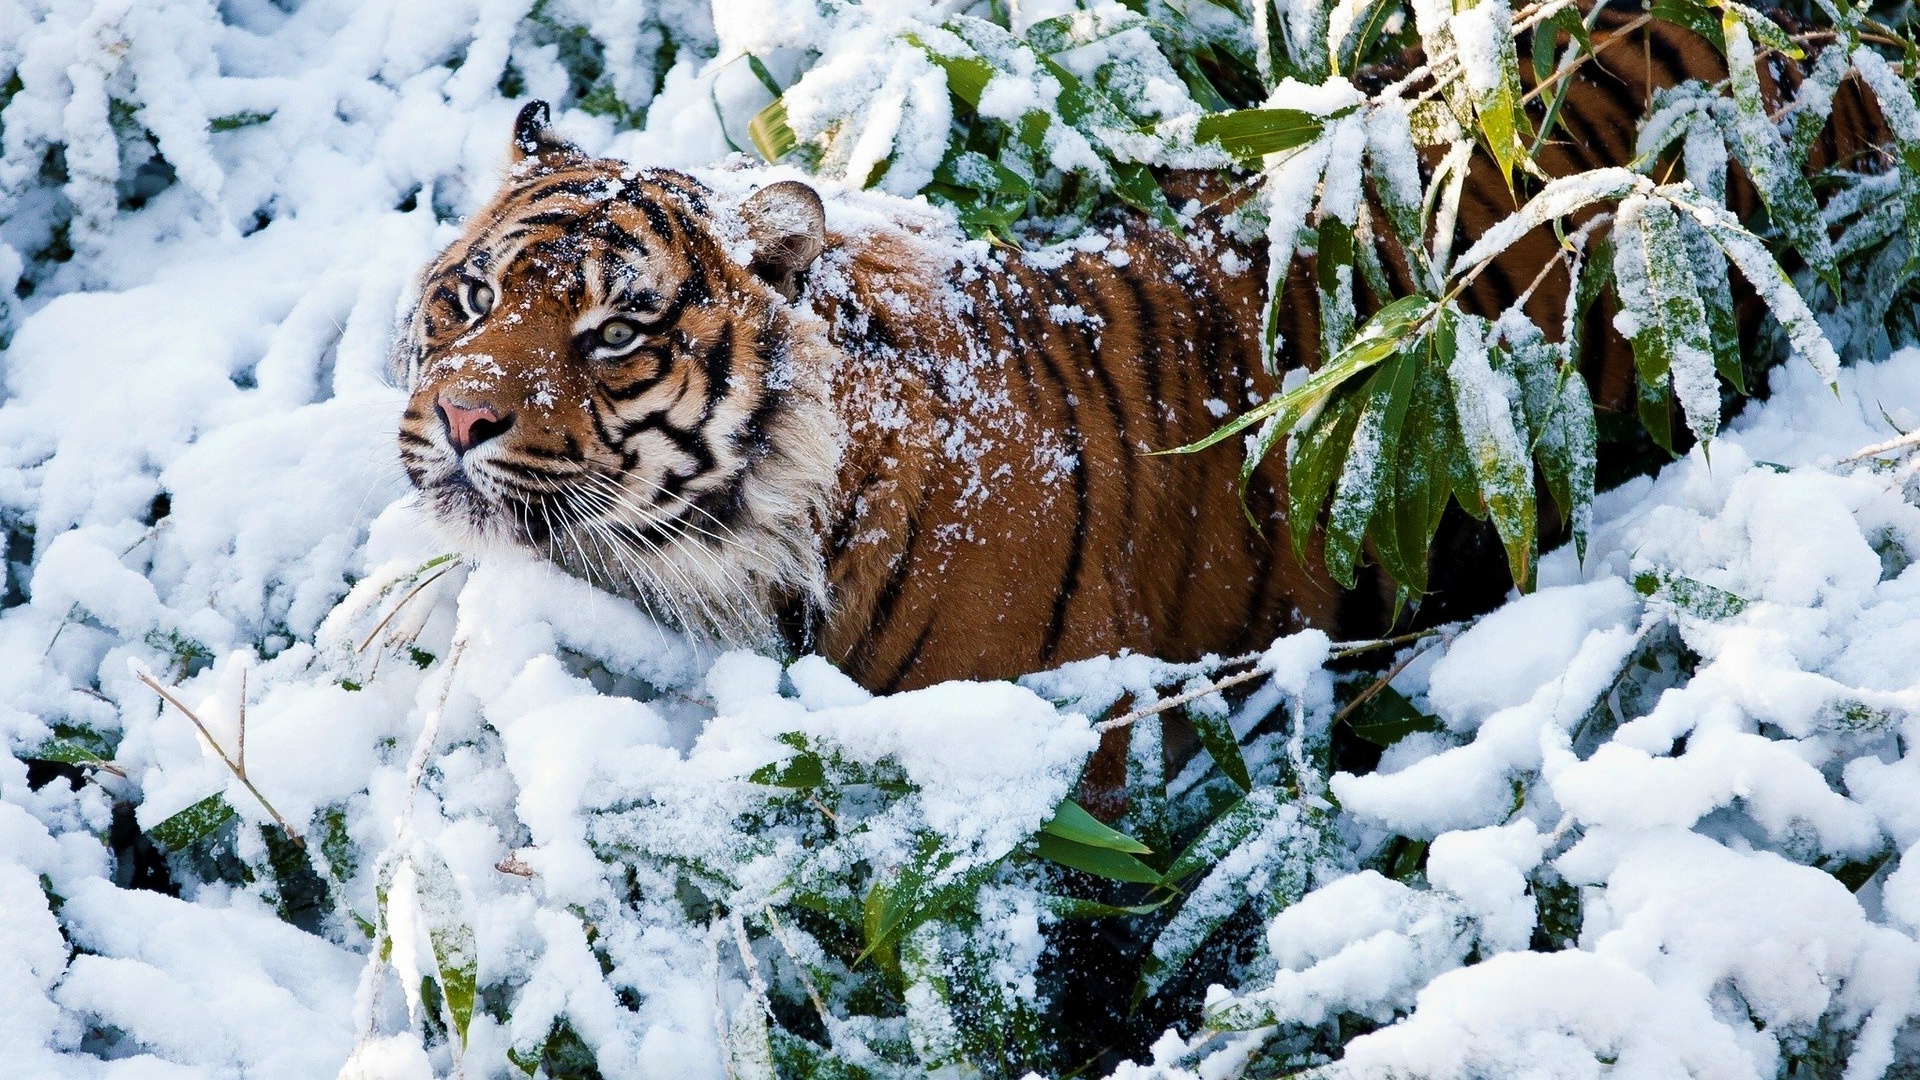 Tiger In The Snow Wallpaper - Hd Tiger In Snow - HD Wallpaper 